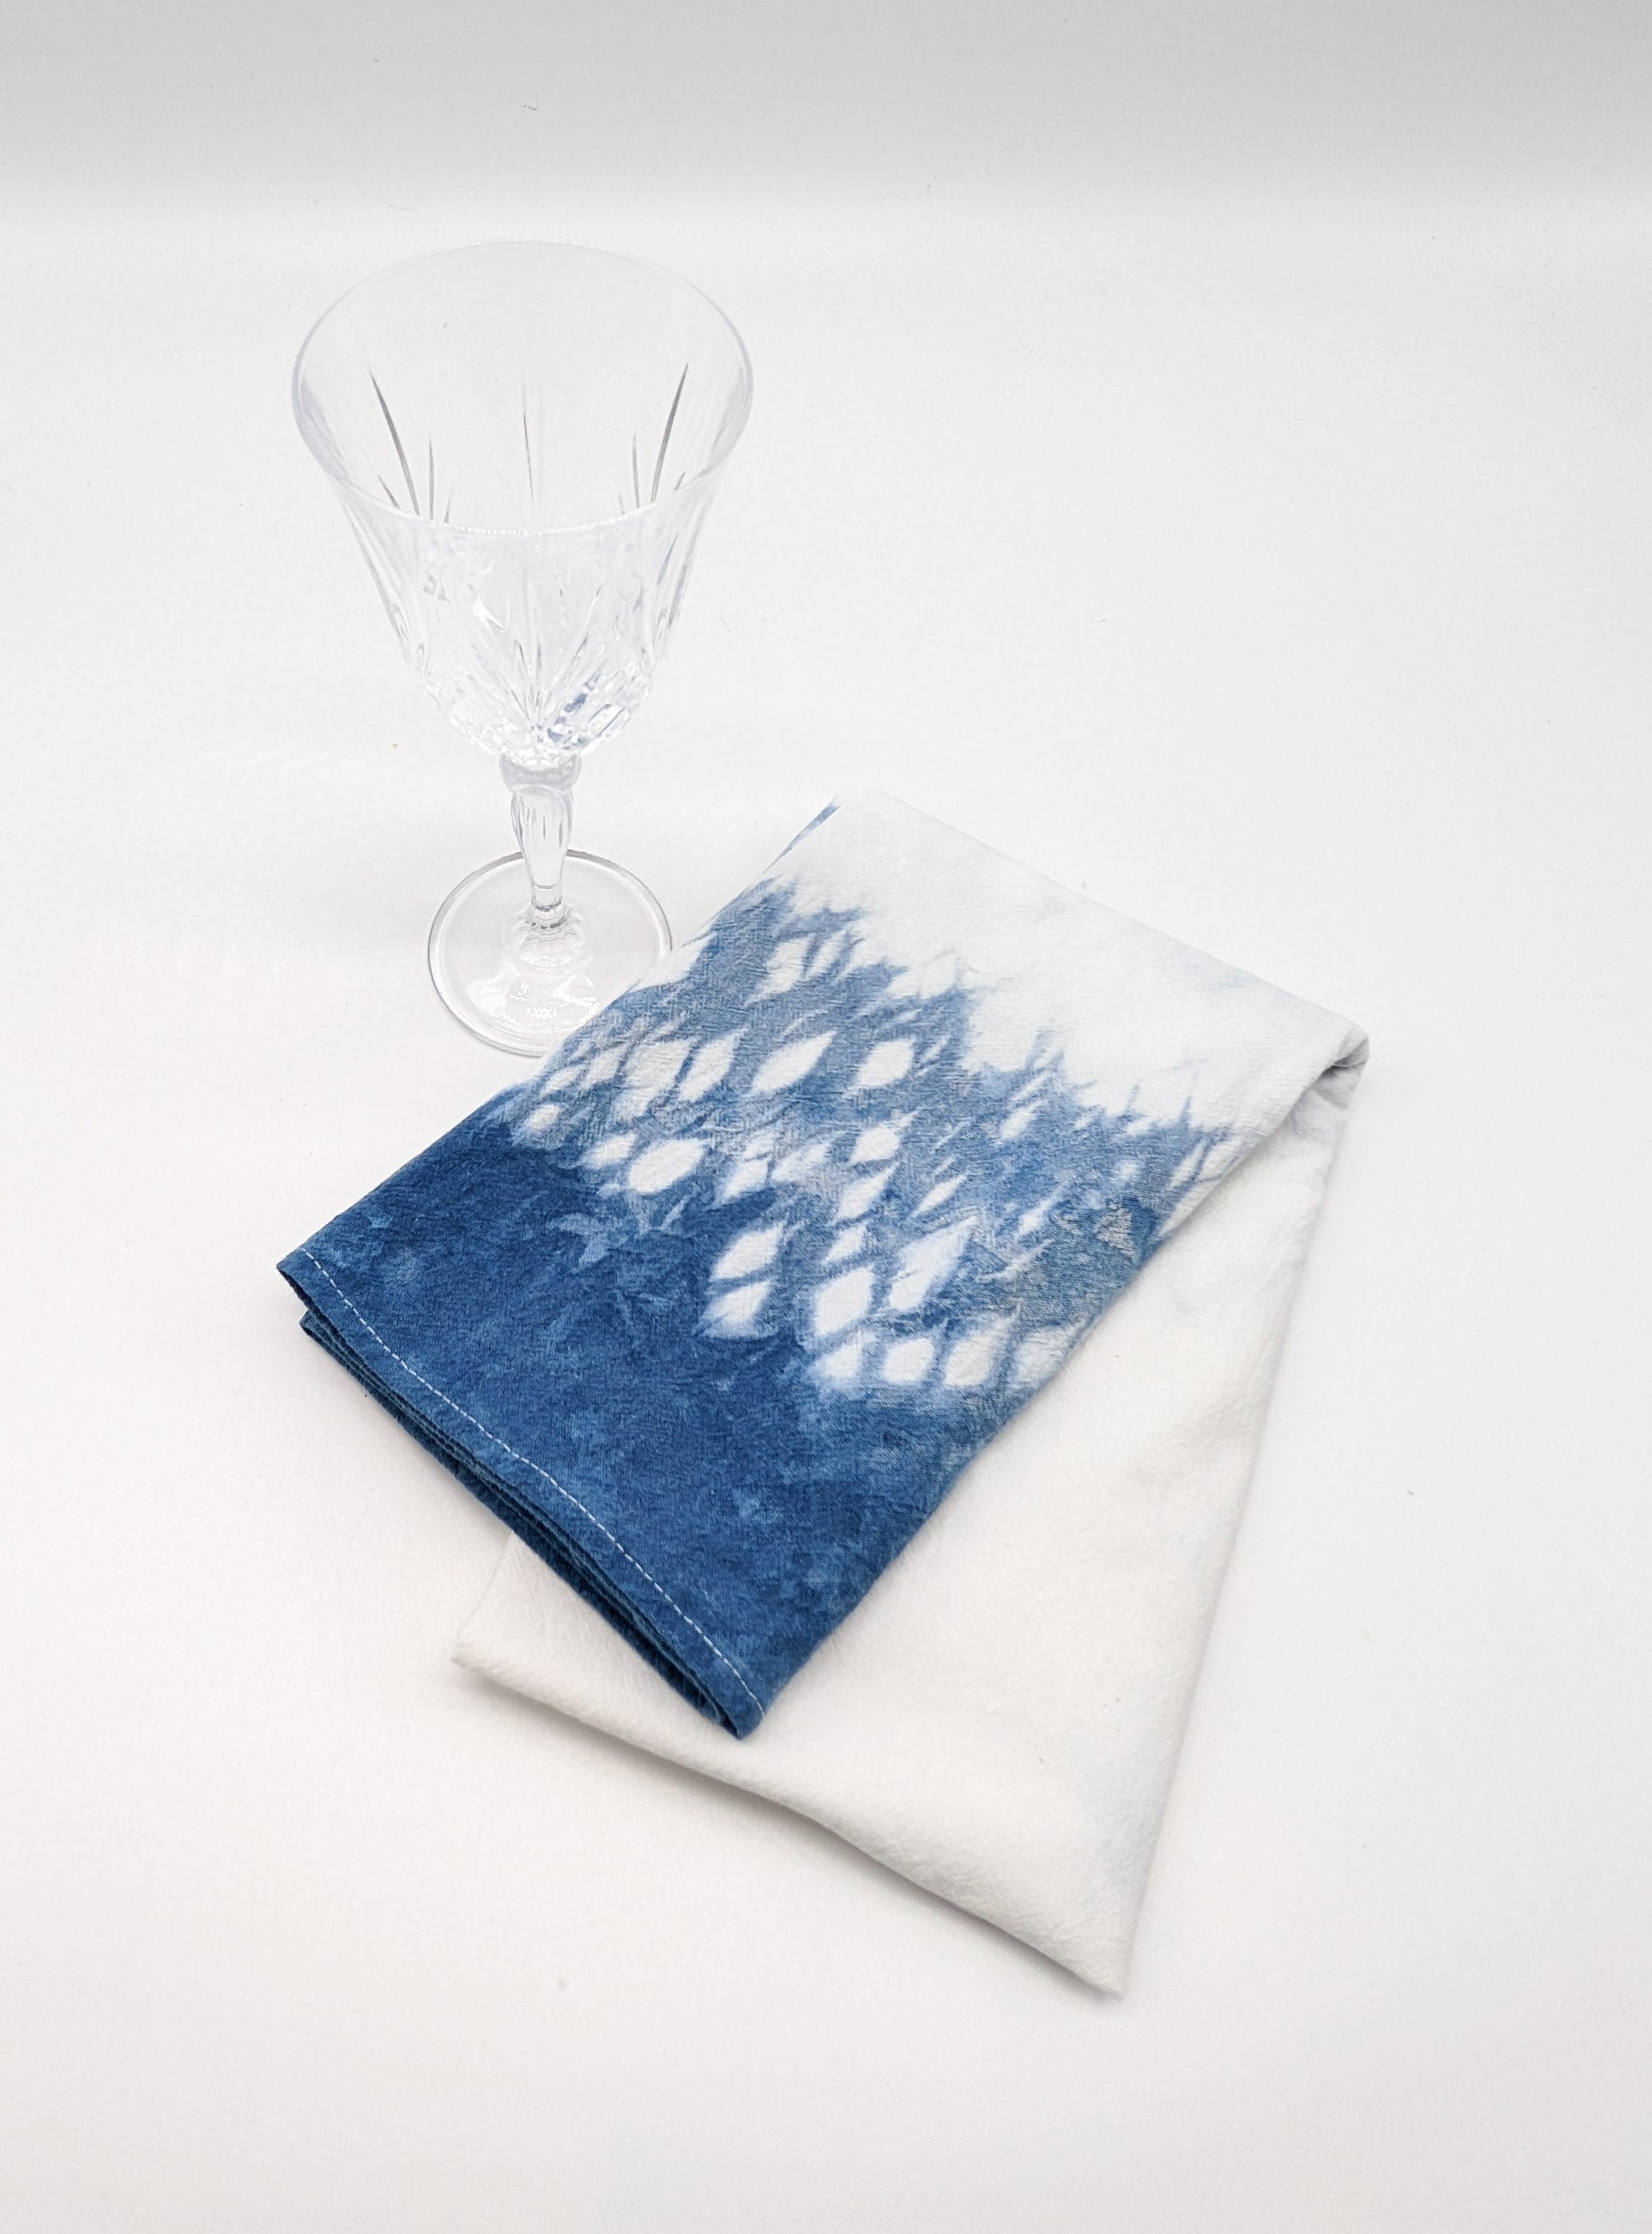 Indigo Shibori Sack Cloth Tea Towel - 24" x 38" - The Caffeinated Raven